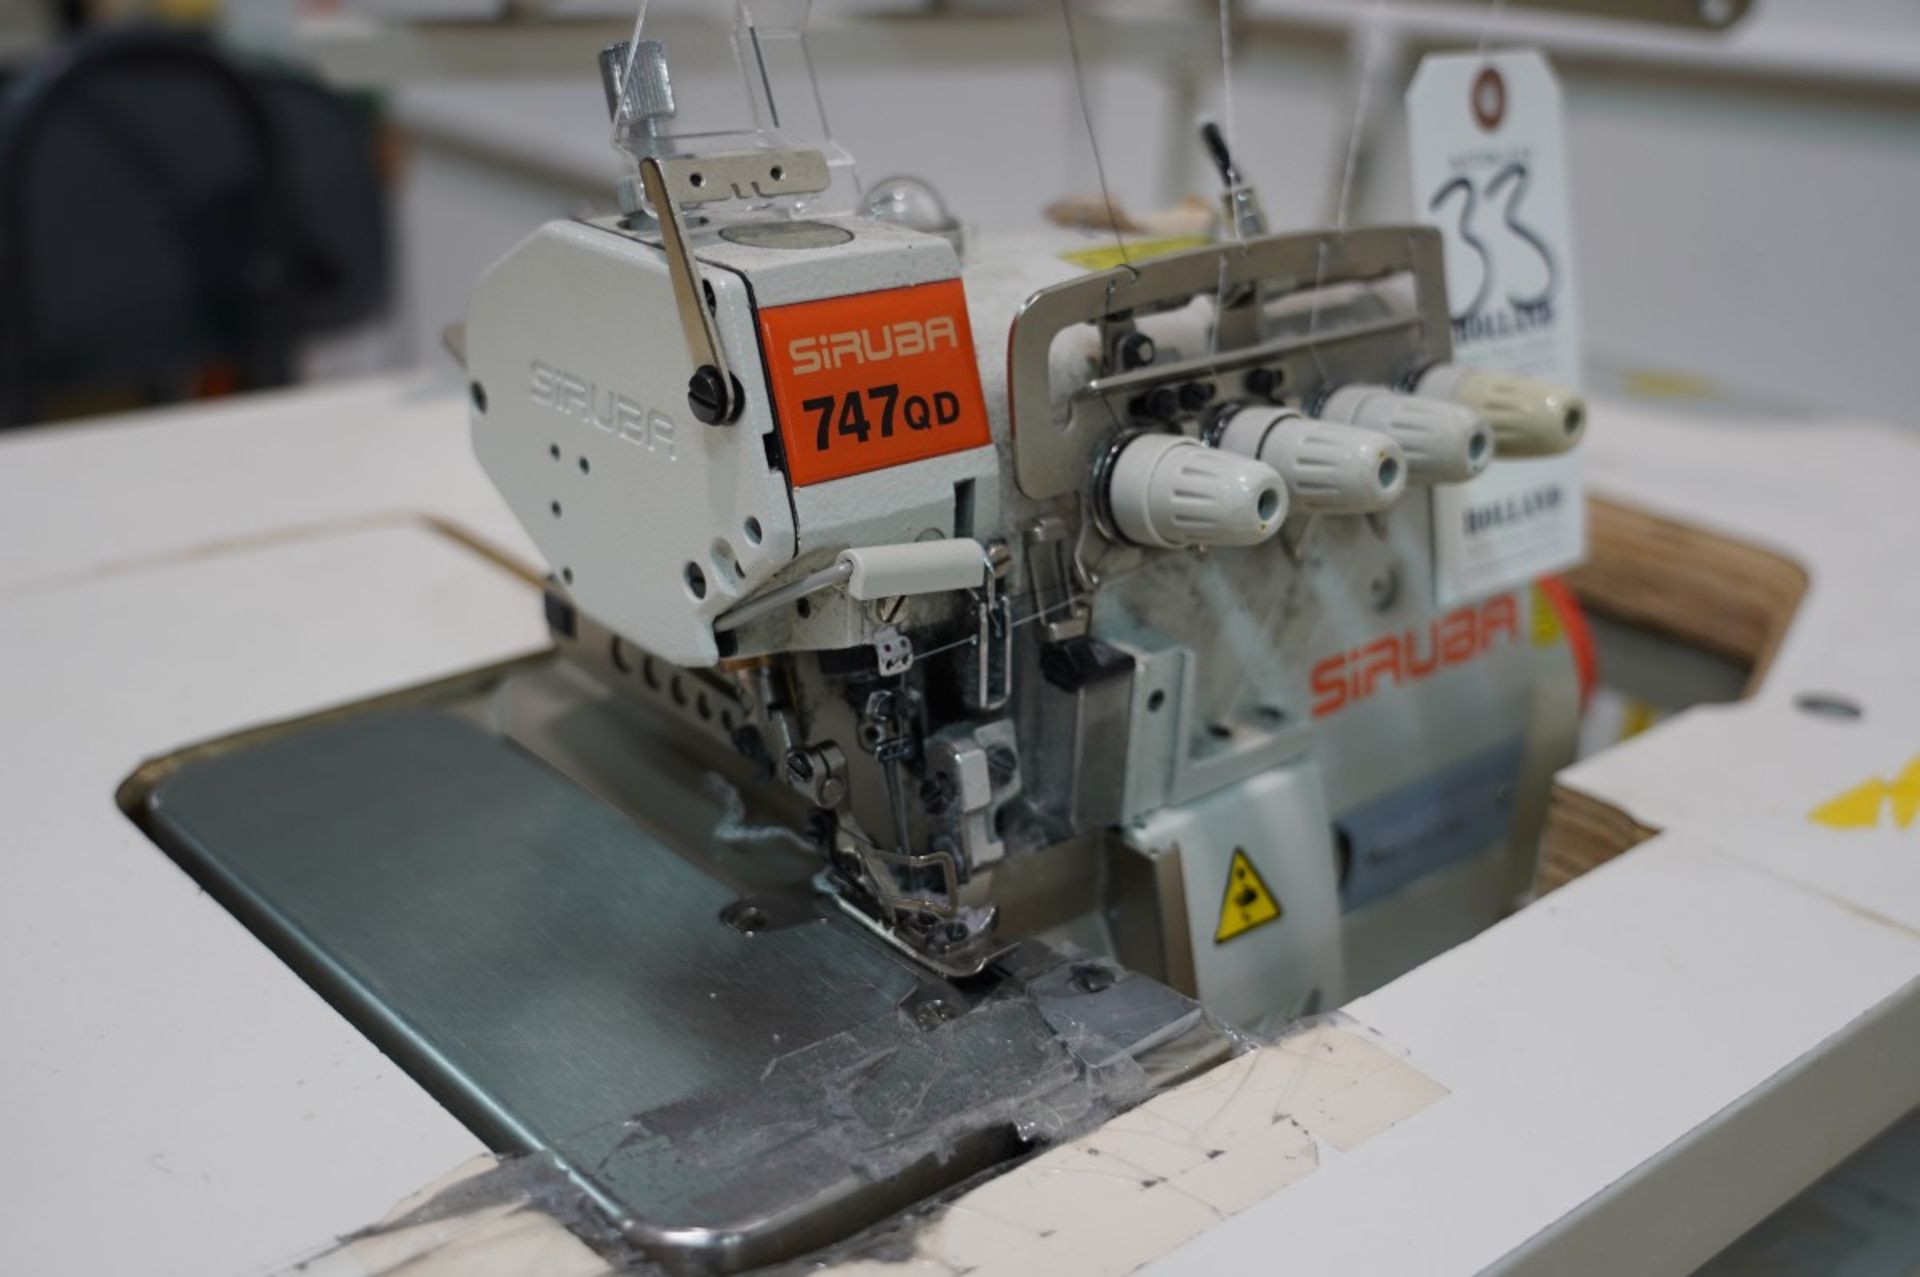 Siruba Overlock Sewing Machine Model 747QD - 514M5-23/BKS S/N HDJA1448C00116, Adjustable Speed, Gau - Image 3 of 7